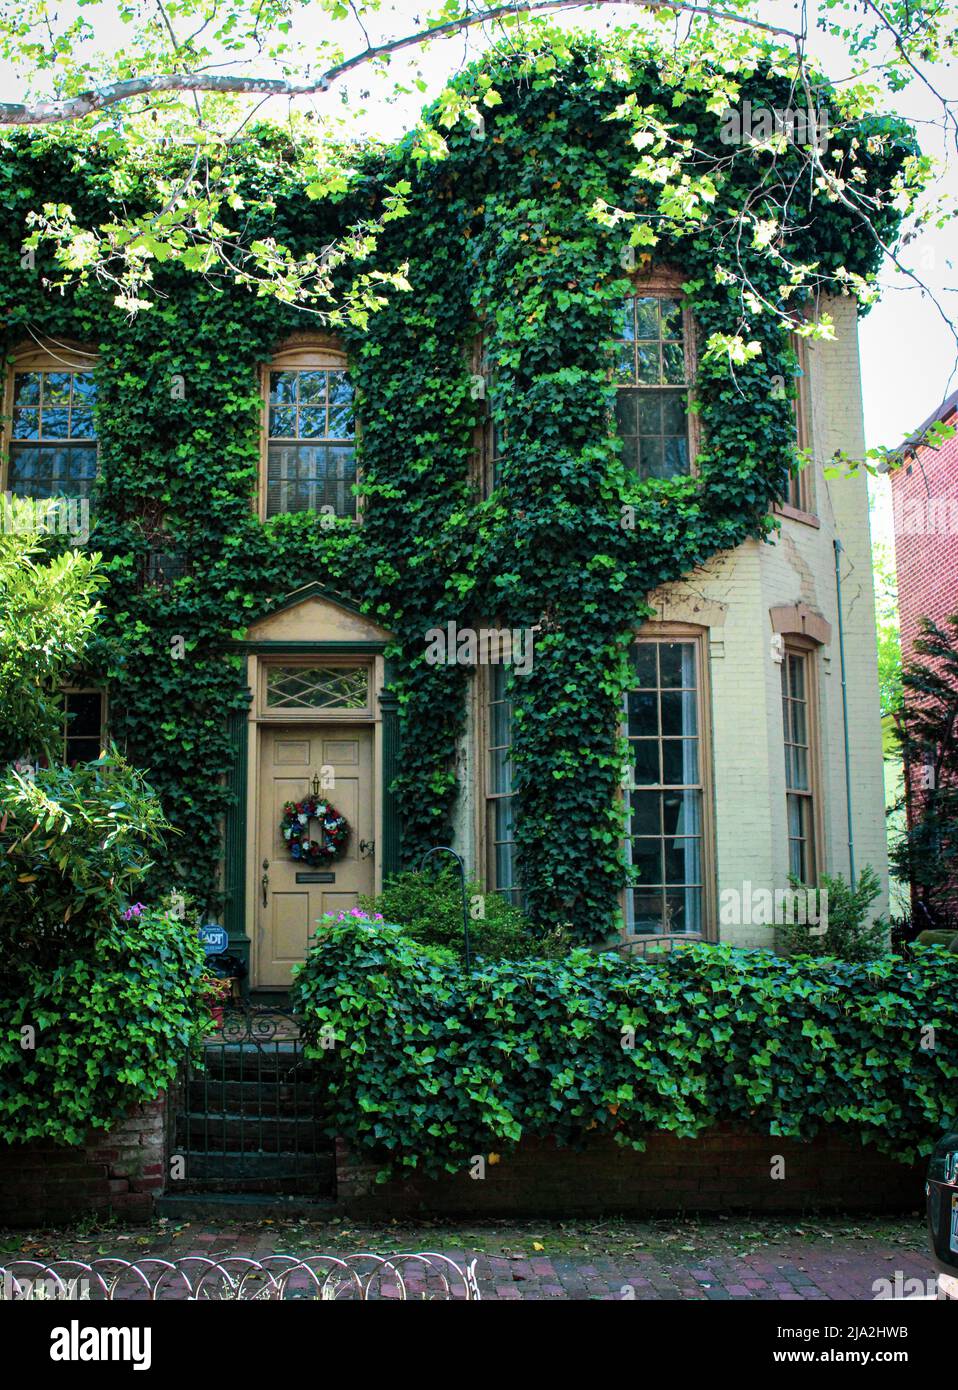 Storica casa di filari ricoperta di viti verdi nel quartiere di Georgetown, District of Columbia. Foto Stock